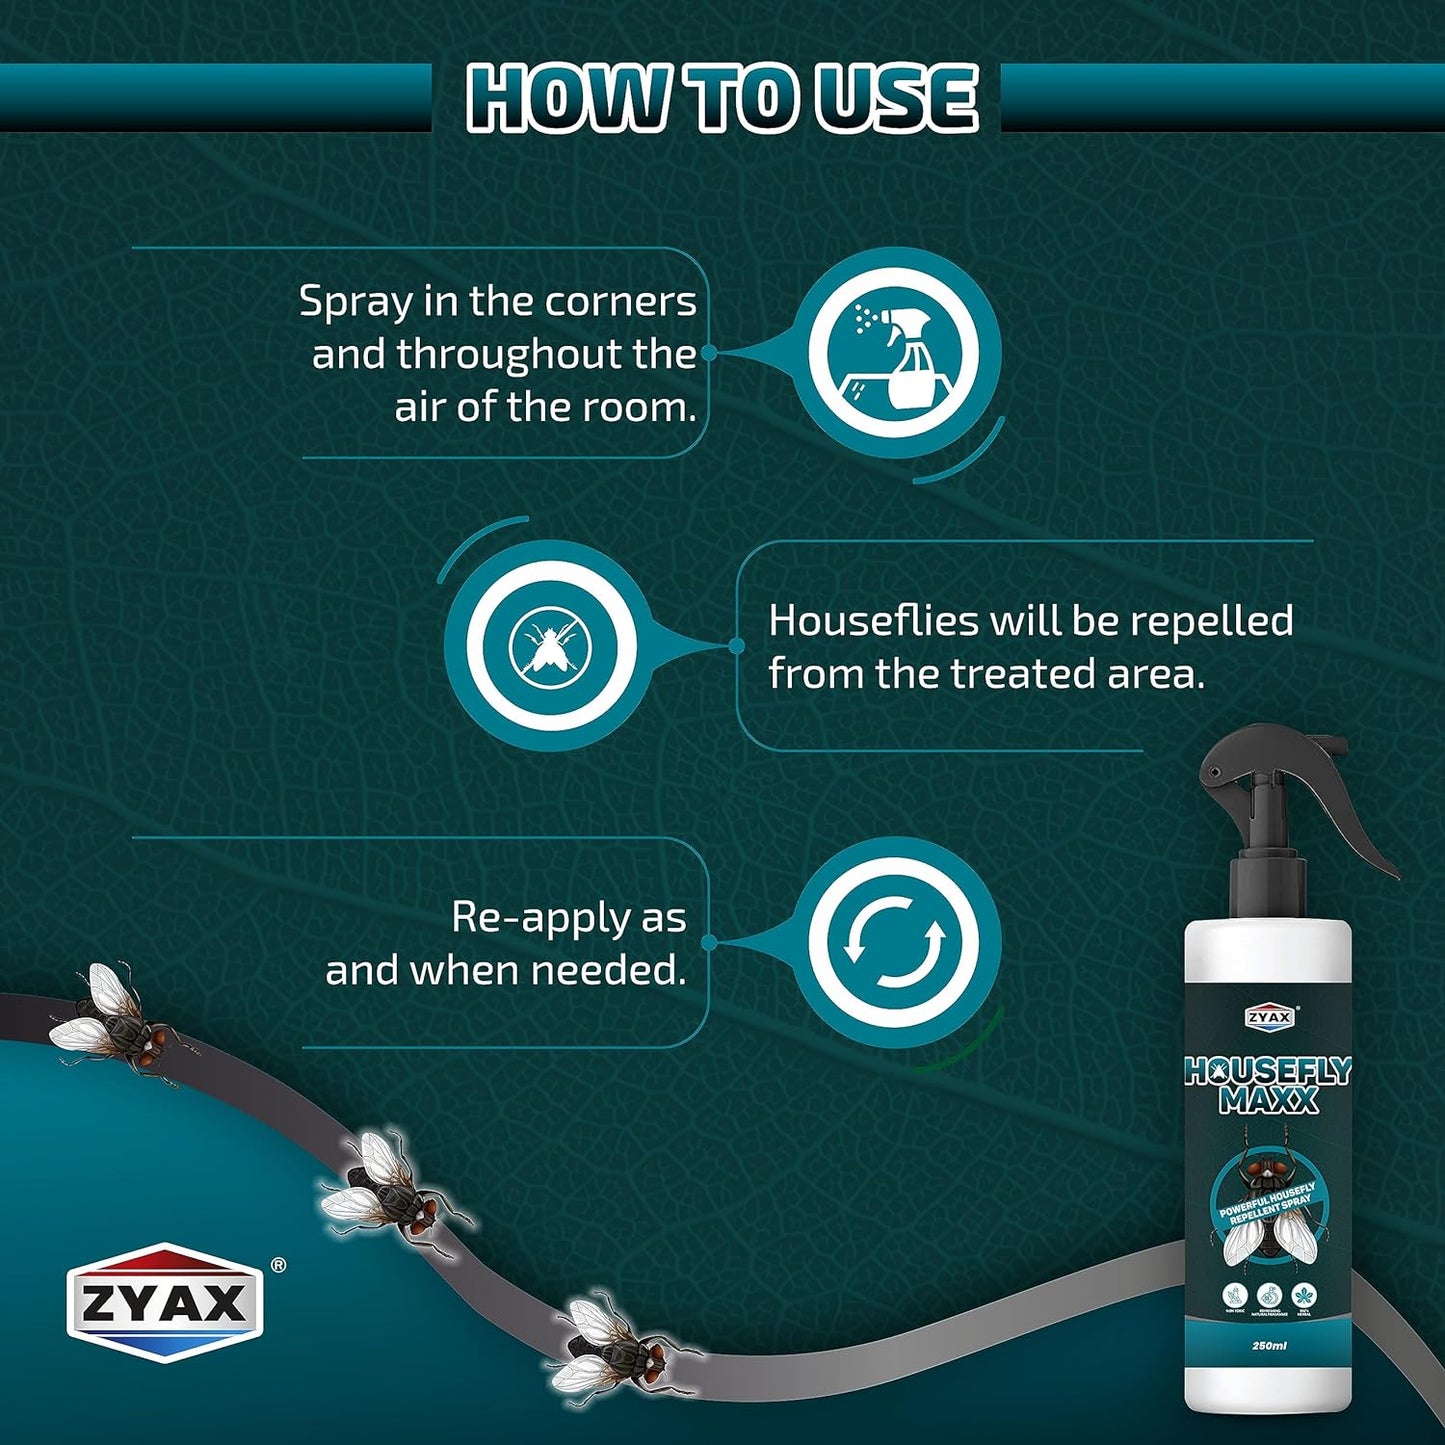 Zyax Housefly Maxx Repellent Spray